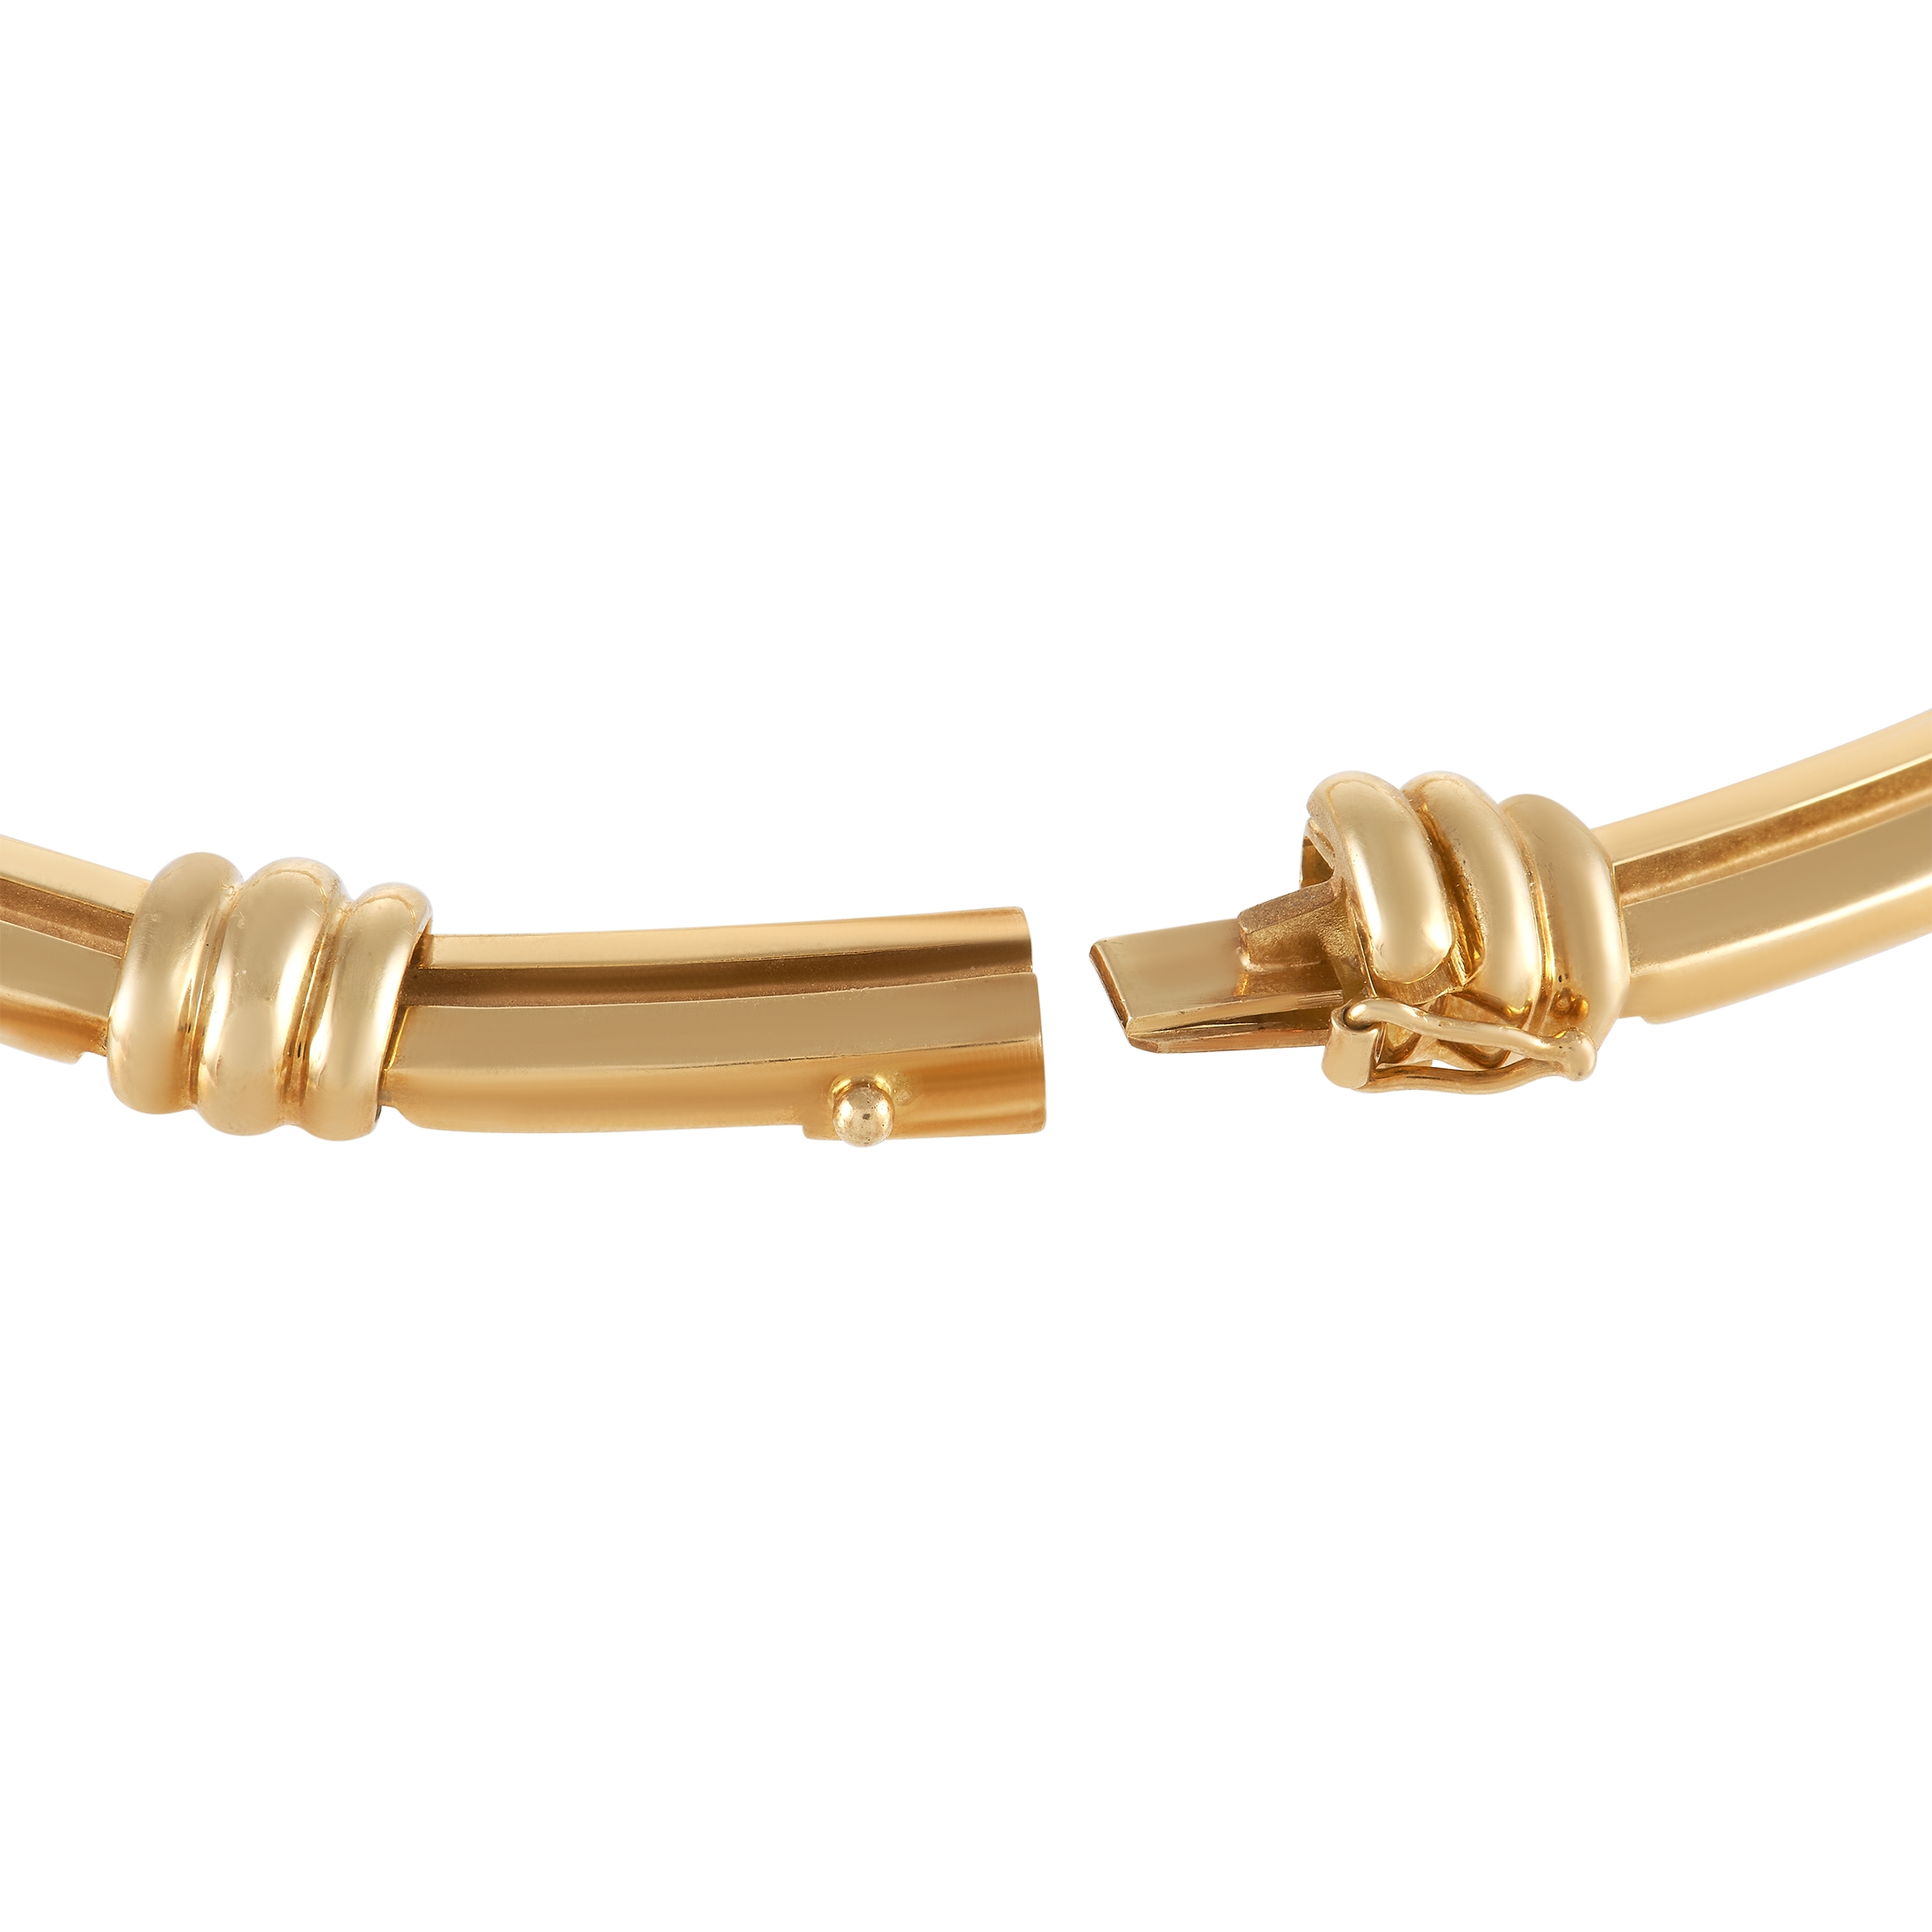 Tiffany & Co. Atlas 18K Yellow Gold Bangle Bracelet